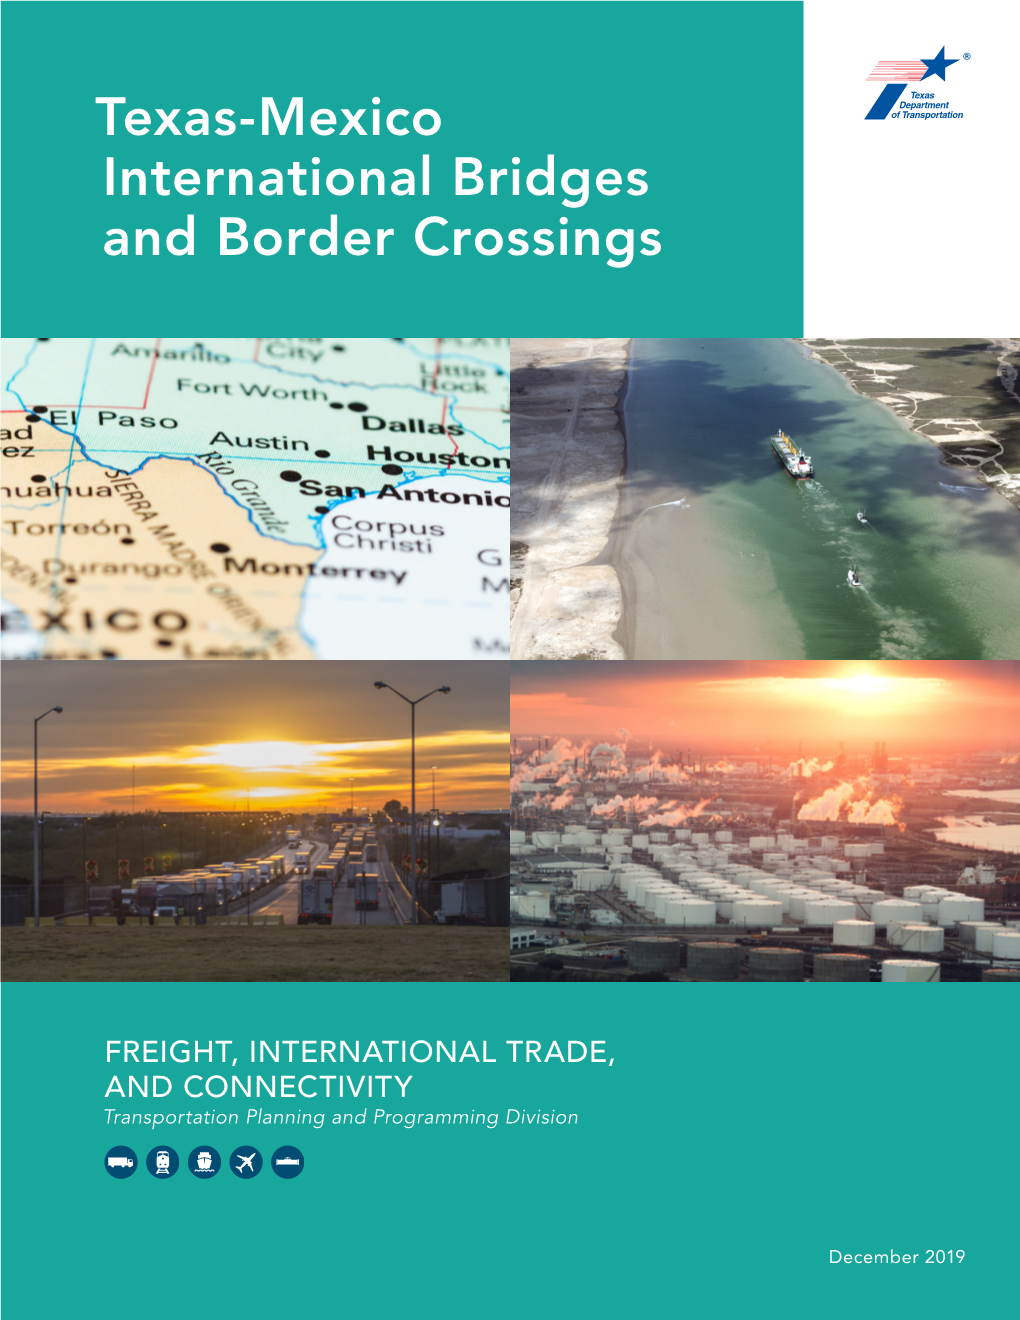 Texas-Mexico International Bridges and Border Crossings 2019